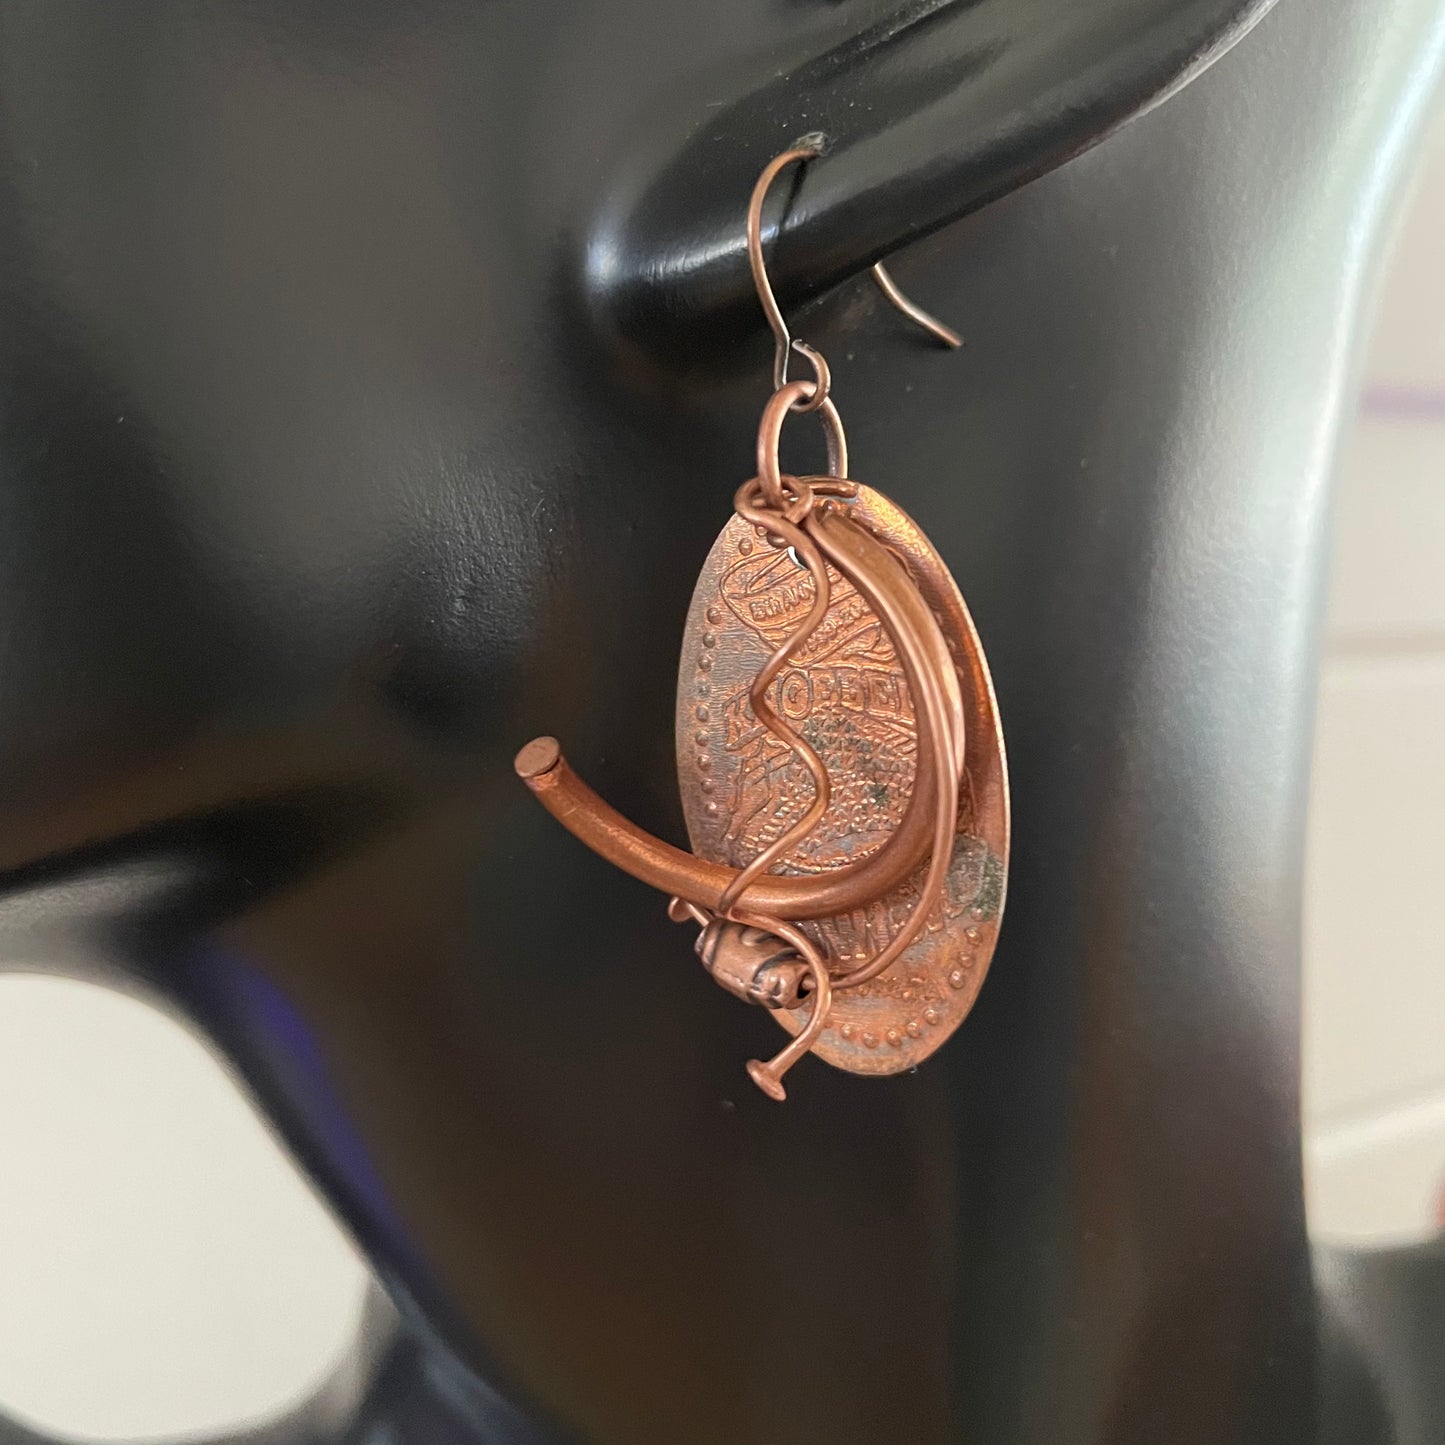 Flattened Penny & Copper Swirl Earrings 2" Handmade Statement Playful Casual Hand Turned Metal Wire